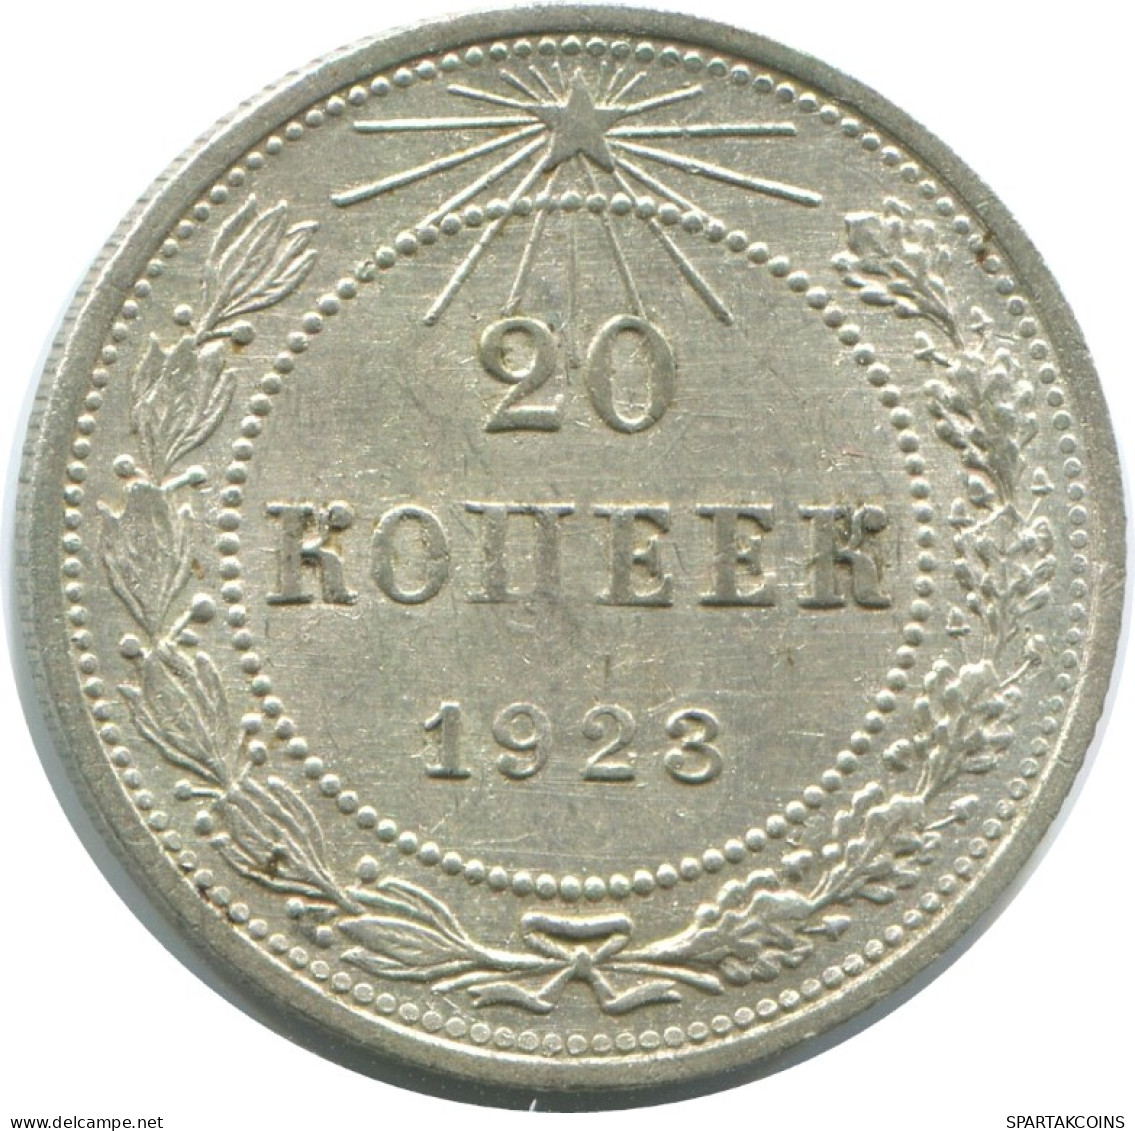 20 KOPEKS 1923 RUSSIA RSFSR SILVER Coin HIGH GRADE #AF518.4.U.A - Russia